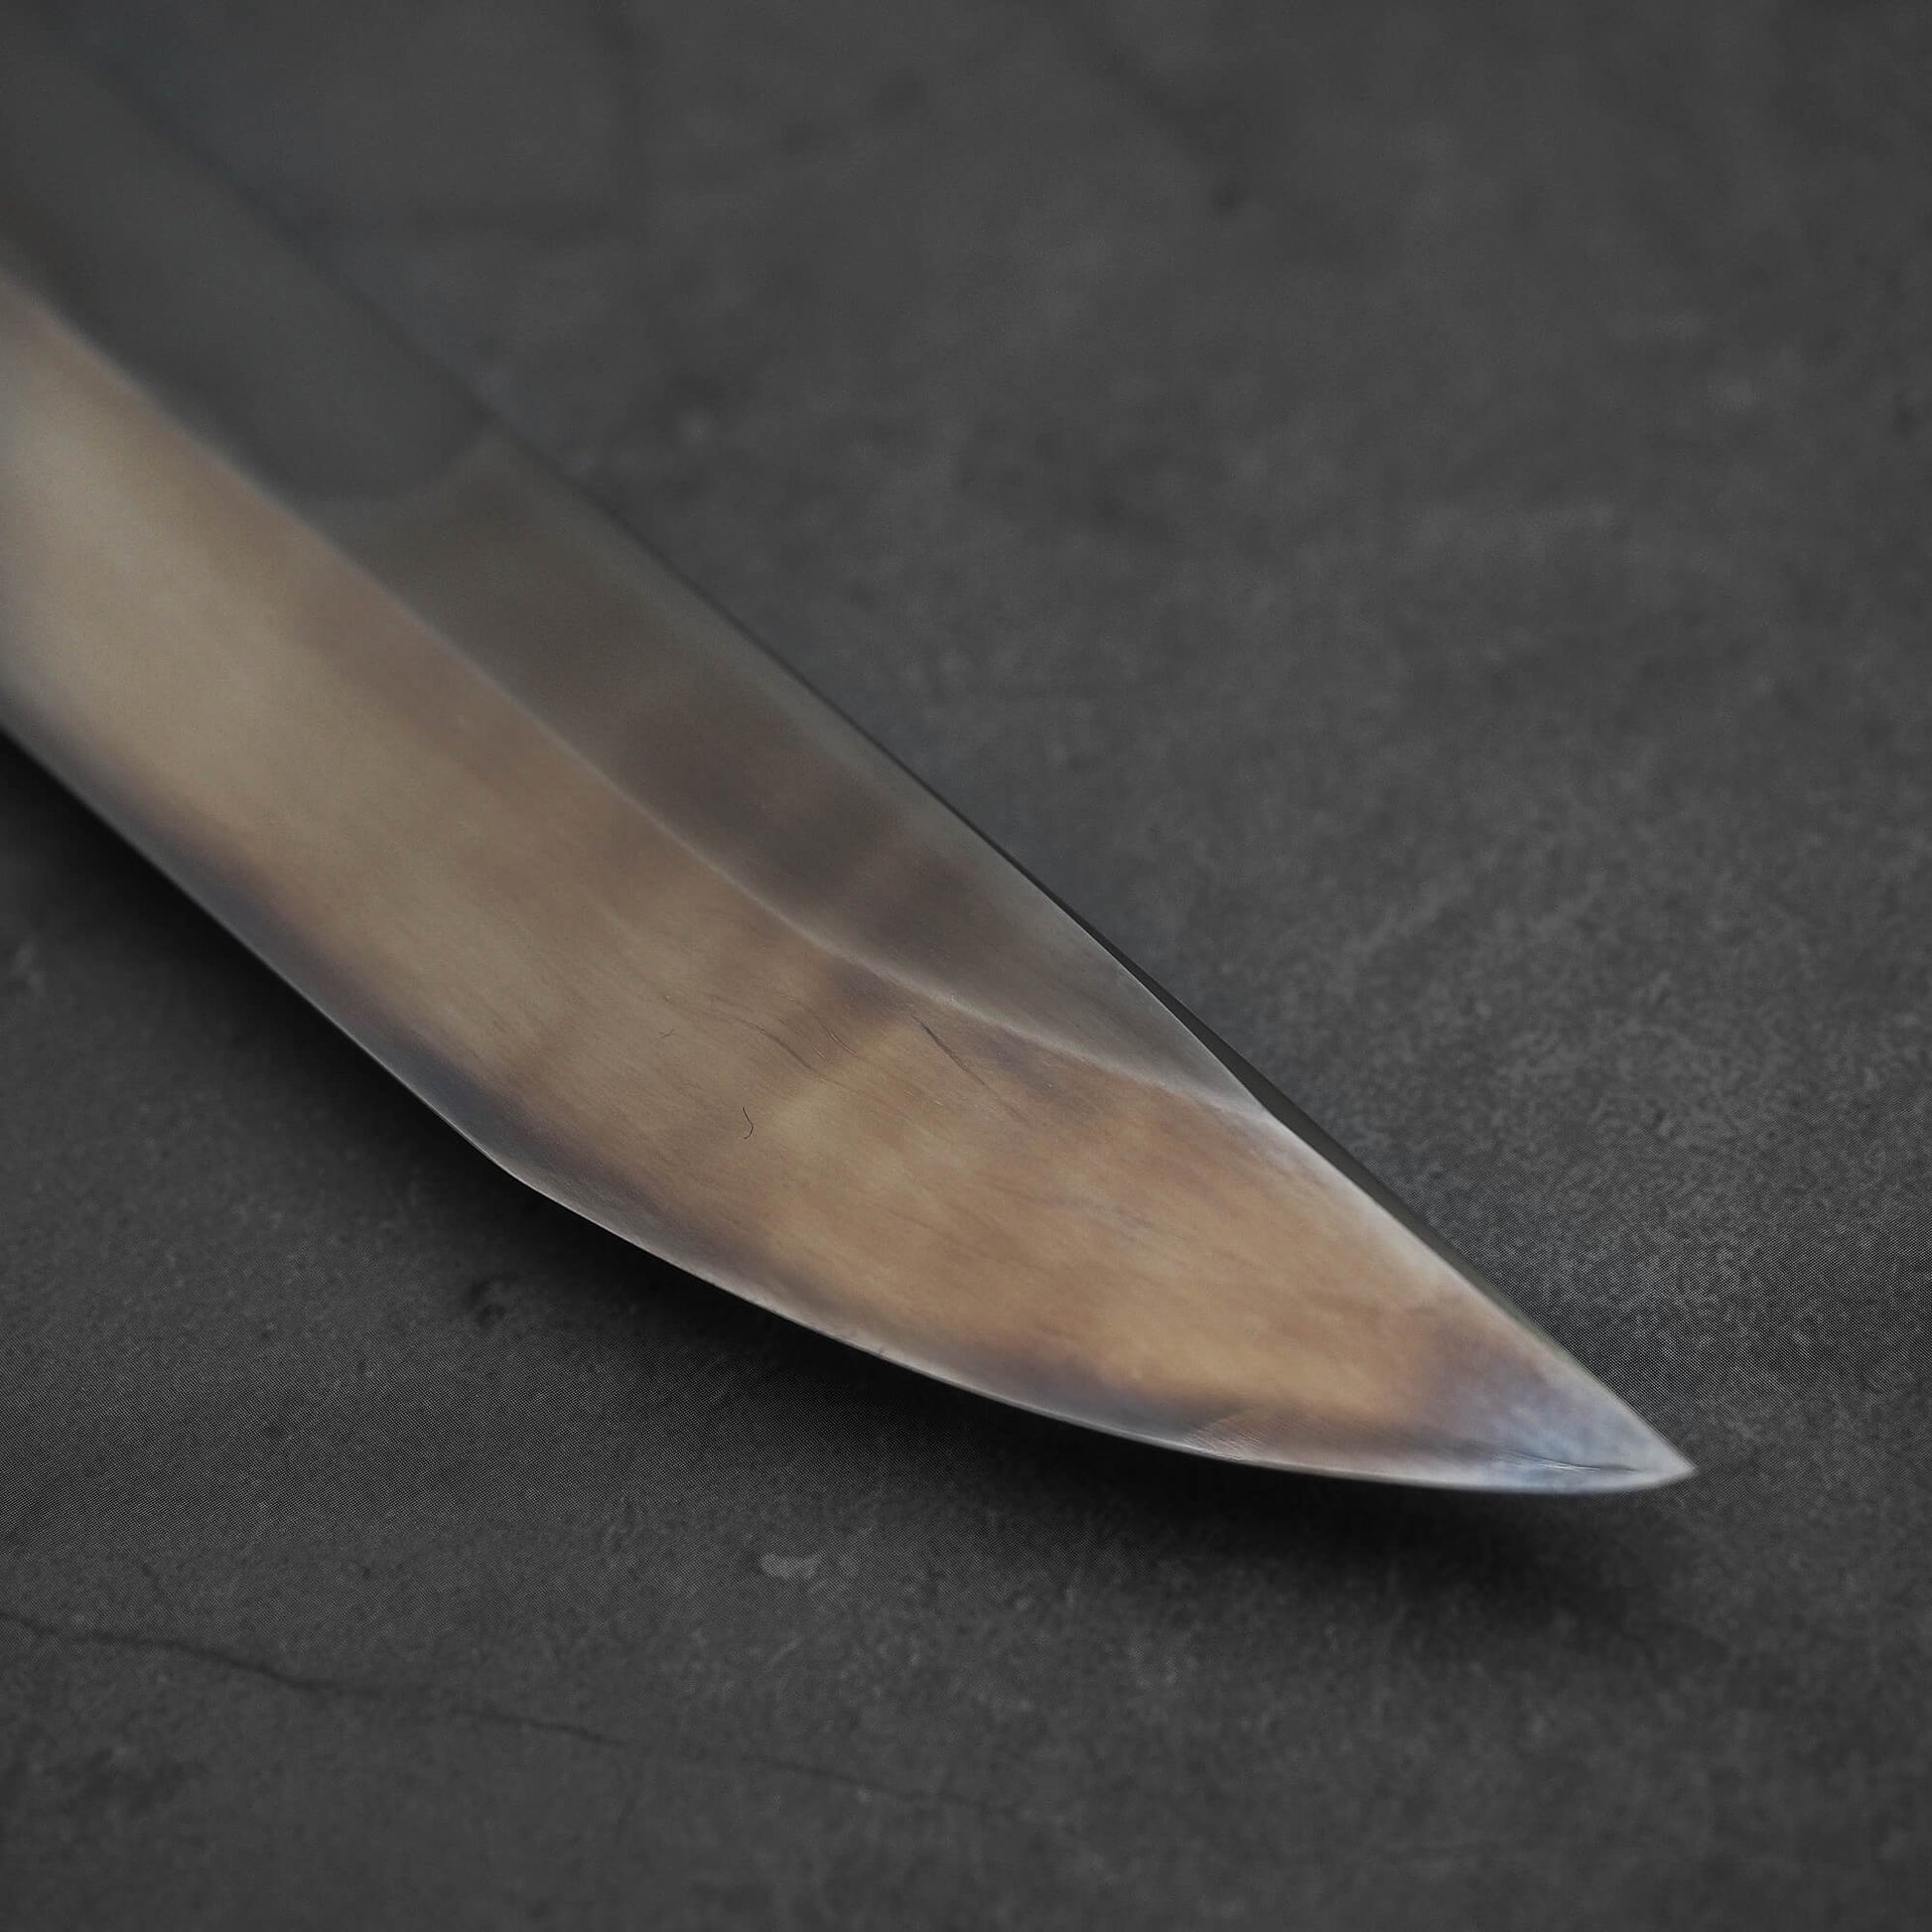 Close up view of Nigara shirogami#1 mizuhonyaki sakimaru yanagiba. Image focuses on the tip of the knife.